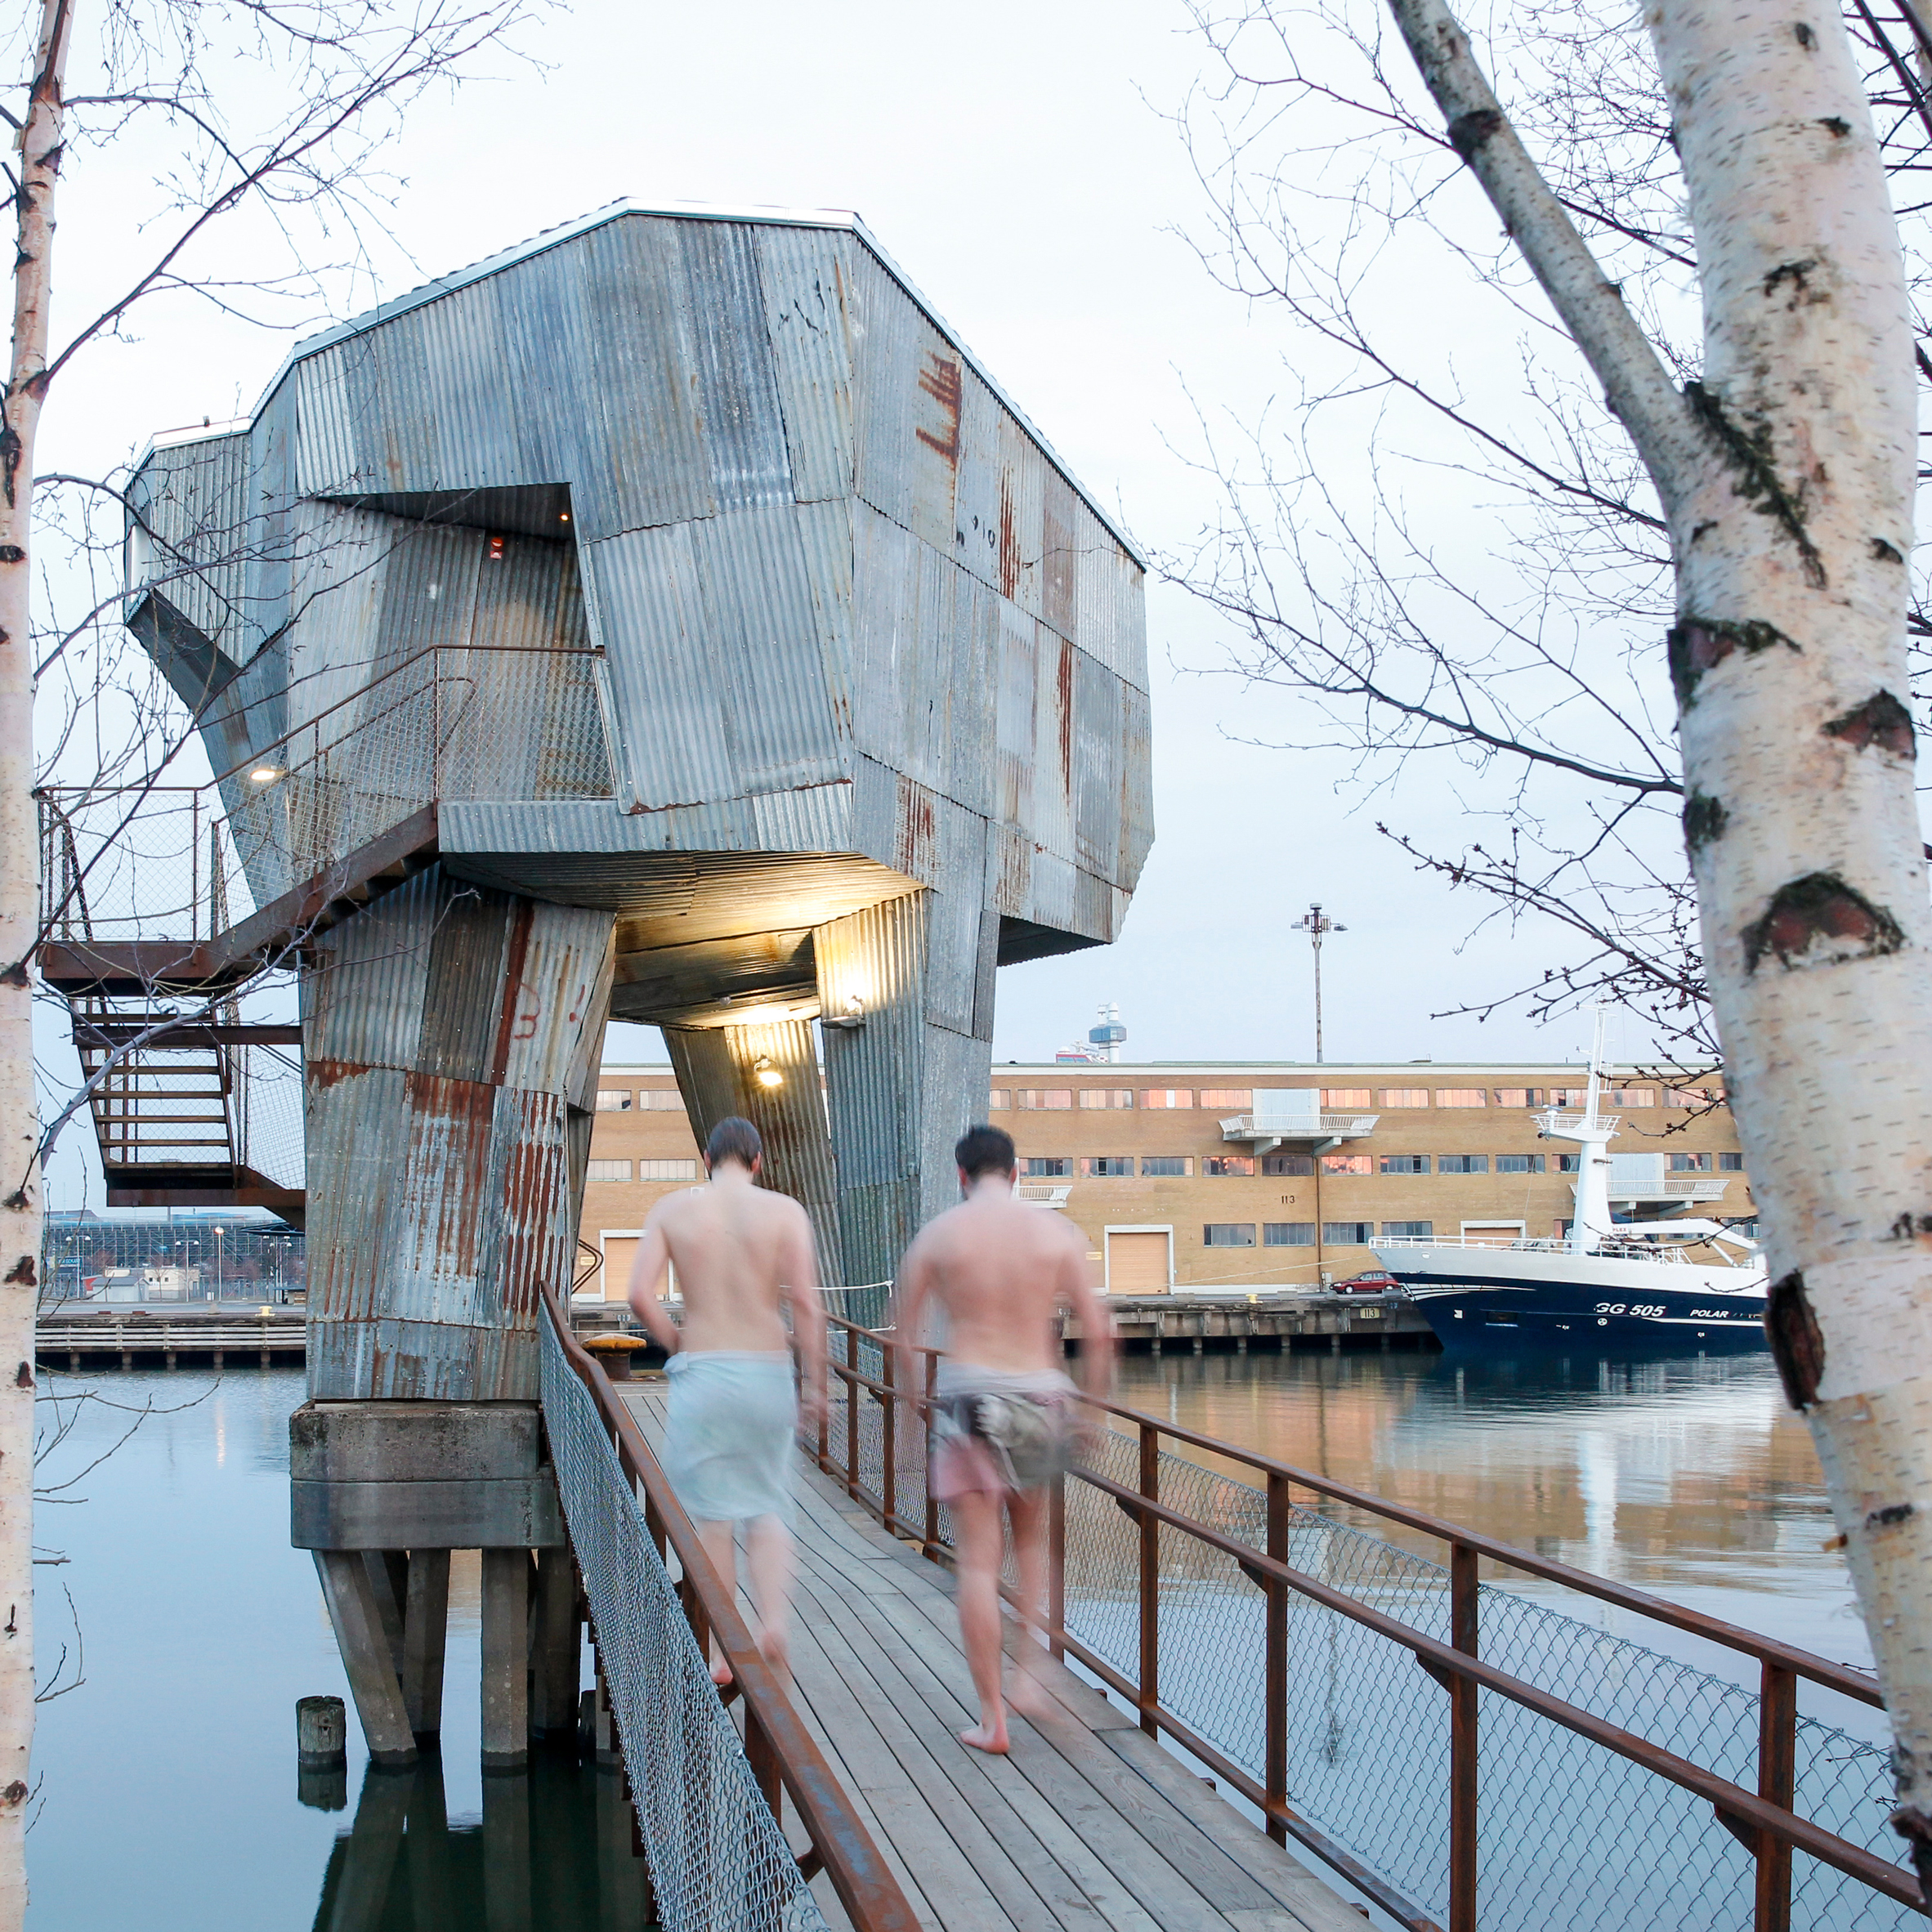 Raumlabor Goteborg sauna is part of Jane Withers' Soak Steam Dream exhibition at the London Design Festival 2016